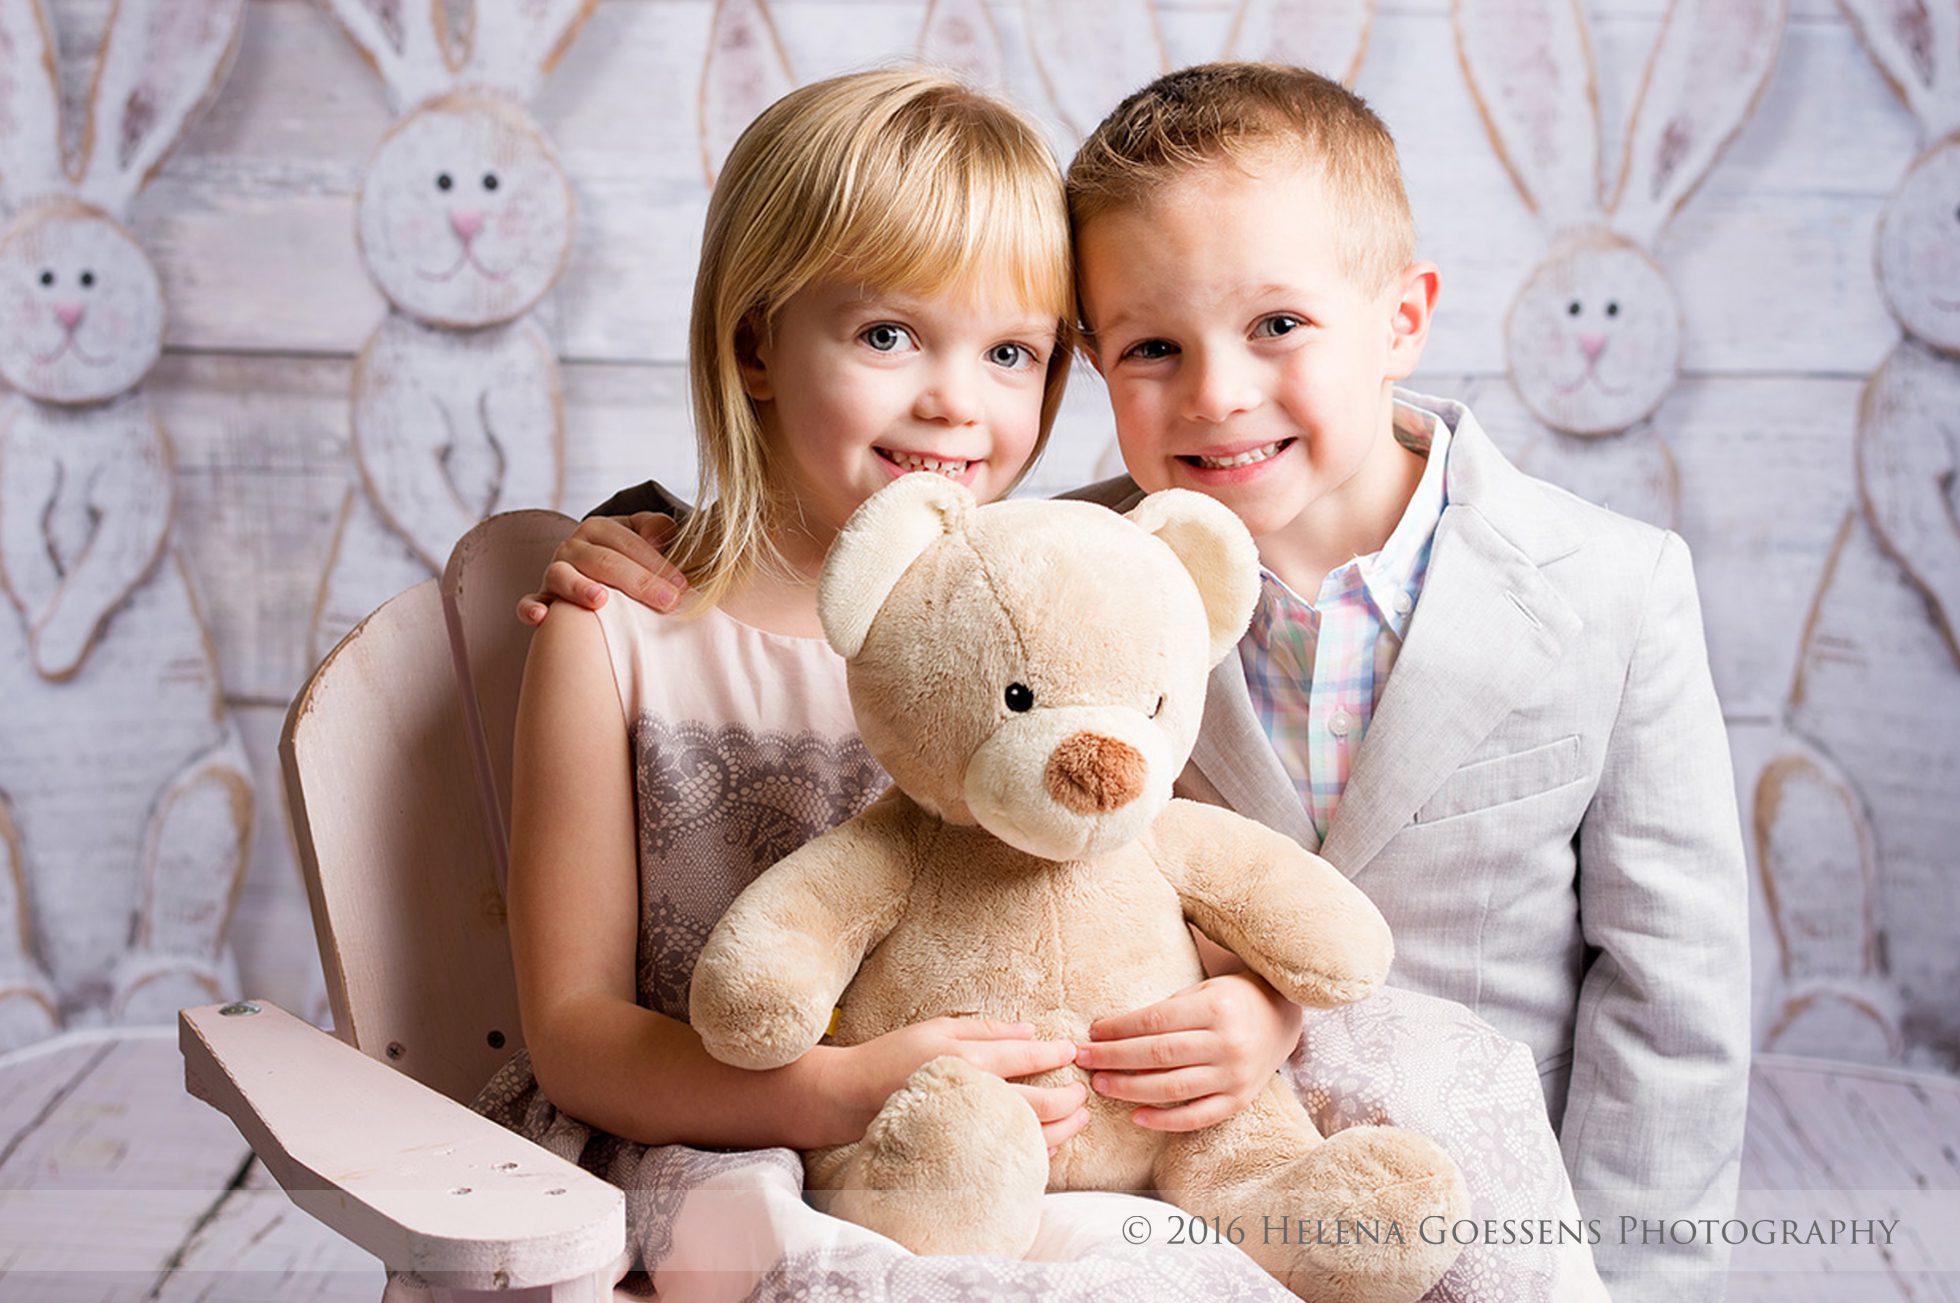 a blond boy and a blond girl holding a teddy bear